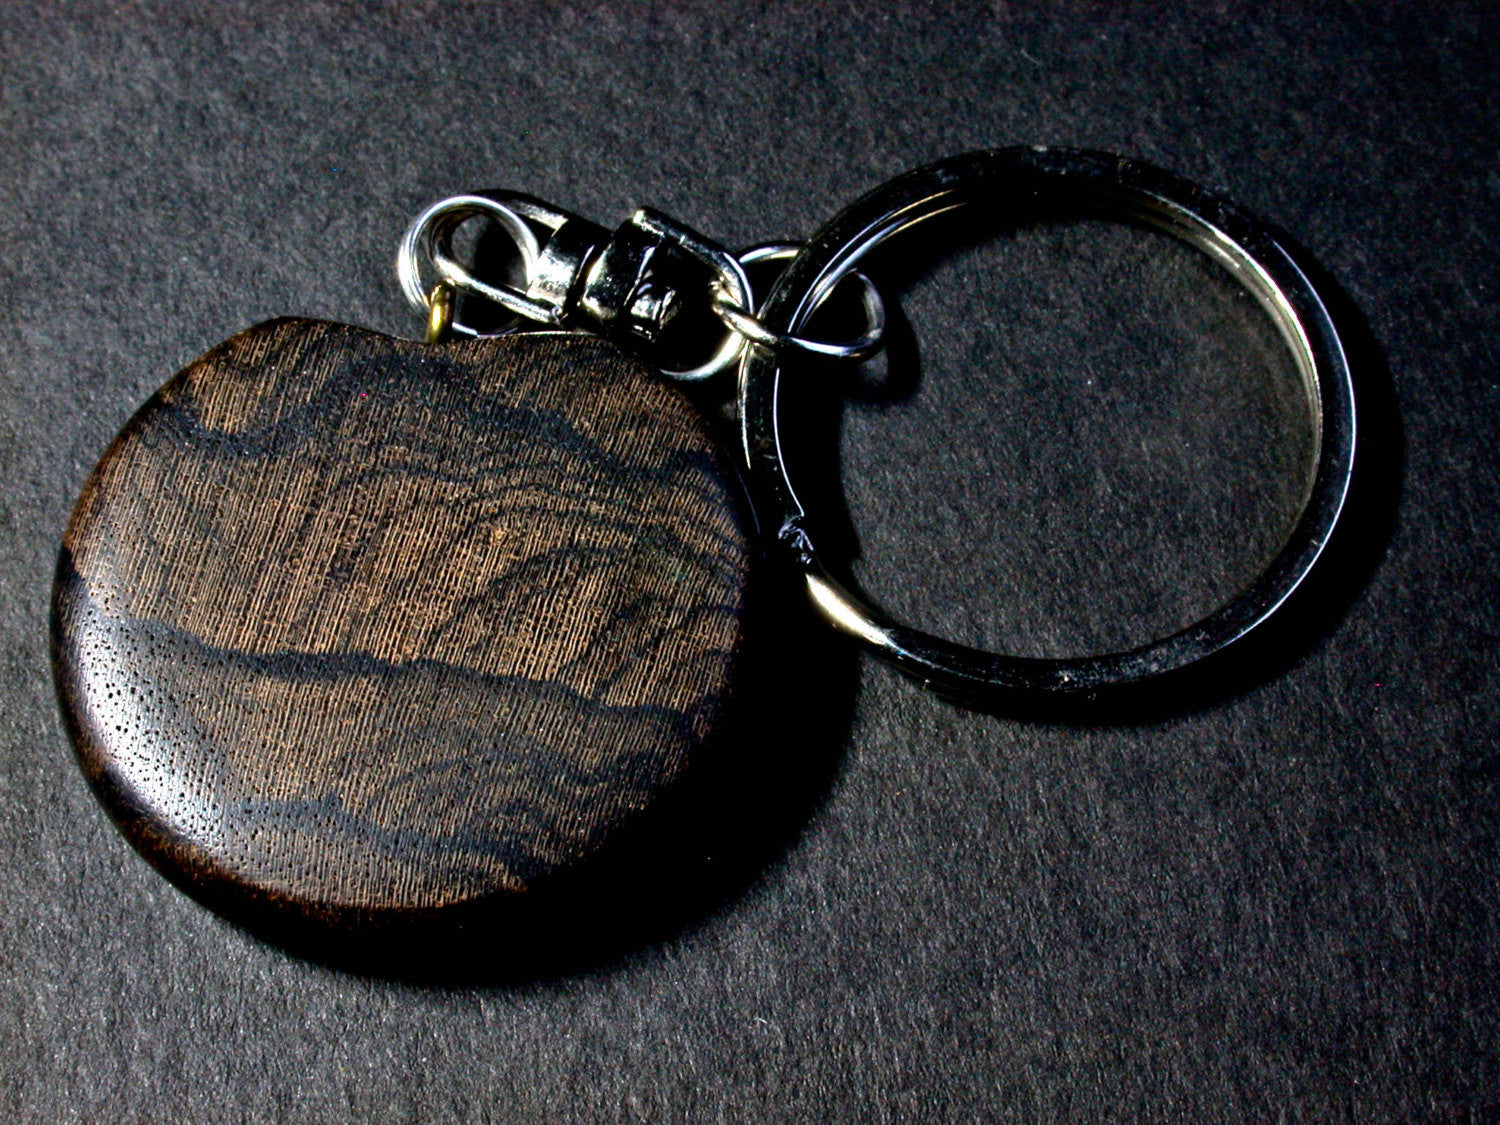 LV-1040 Ziricote Wooden Disc Keychain, Pendant, Charm-Hand Made